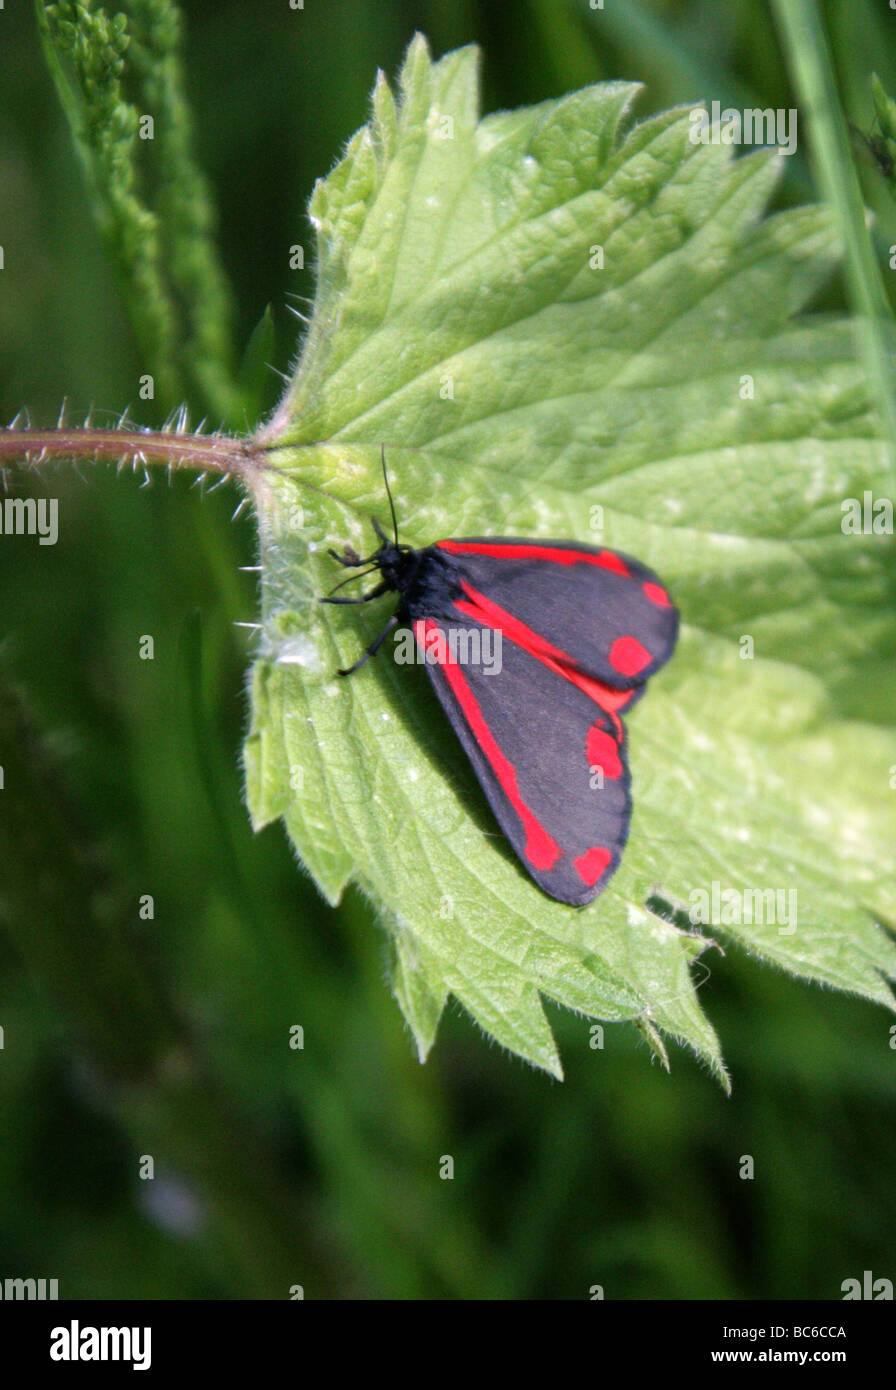 Cinnabar Moth, Tyria jacobaeae, Arctiidae. A Day Flying Moth. Stock Photo